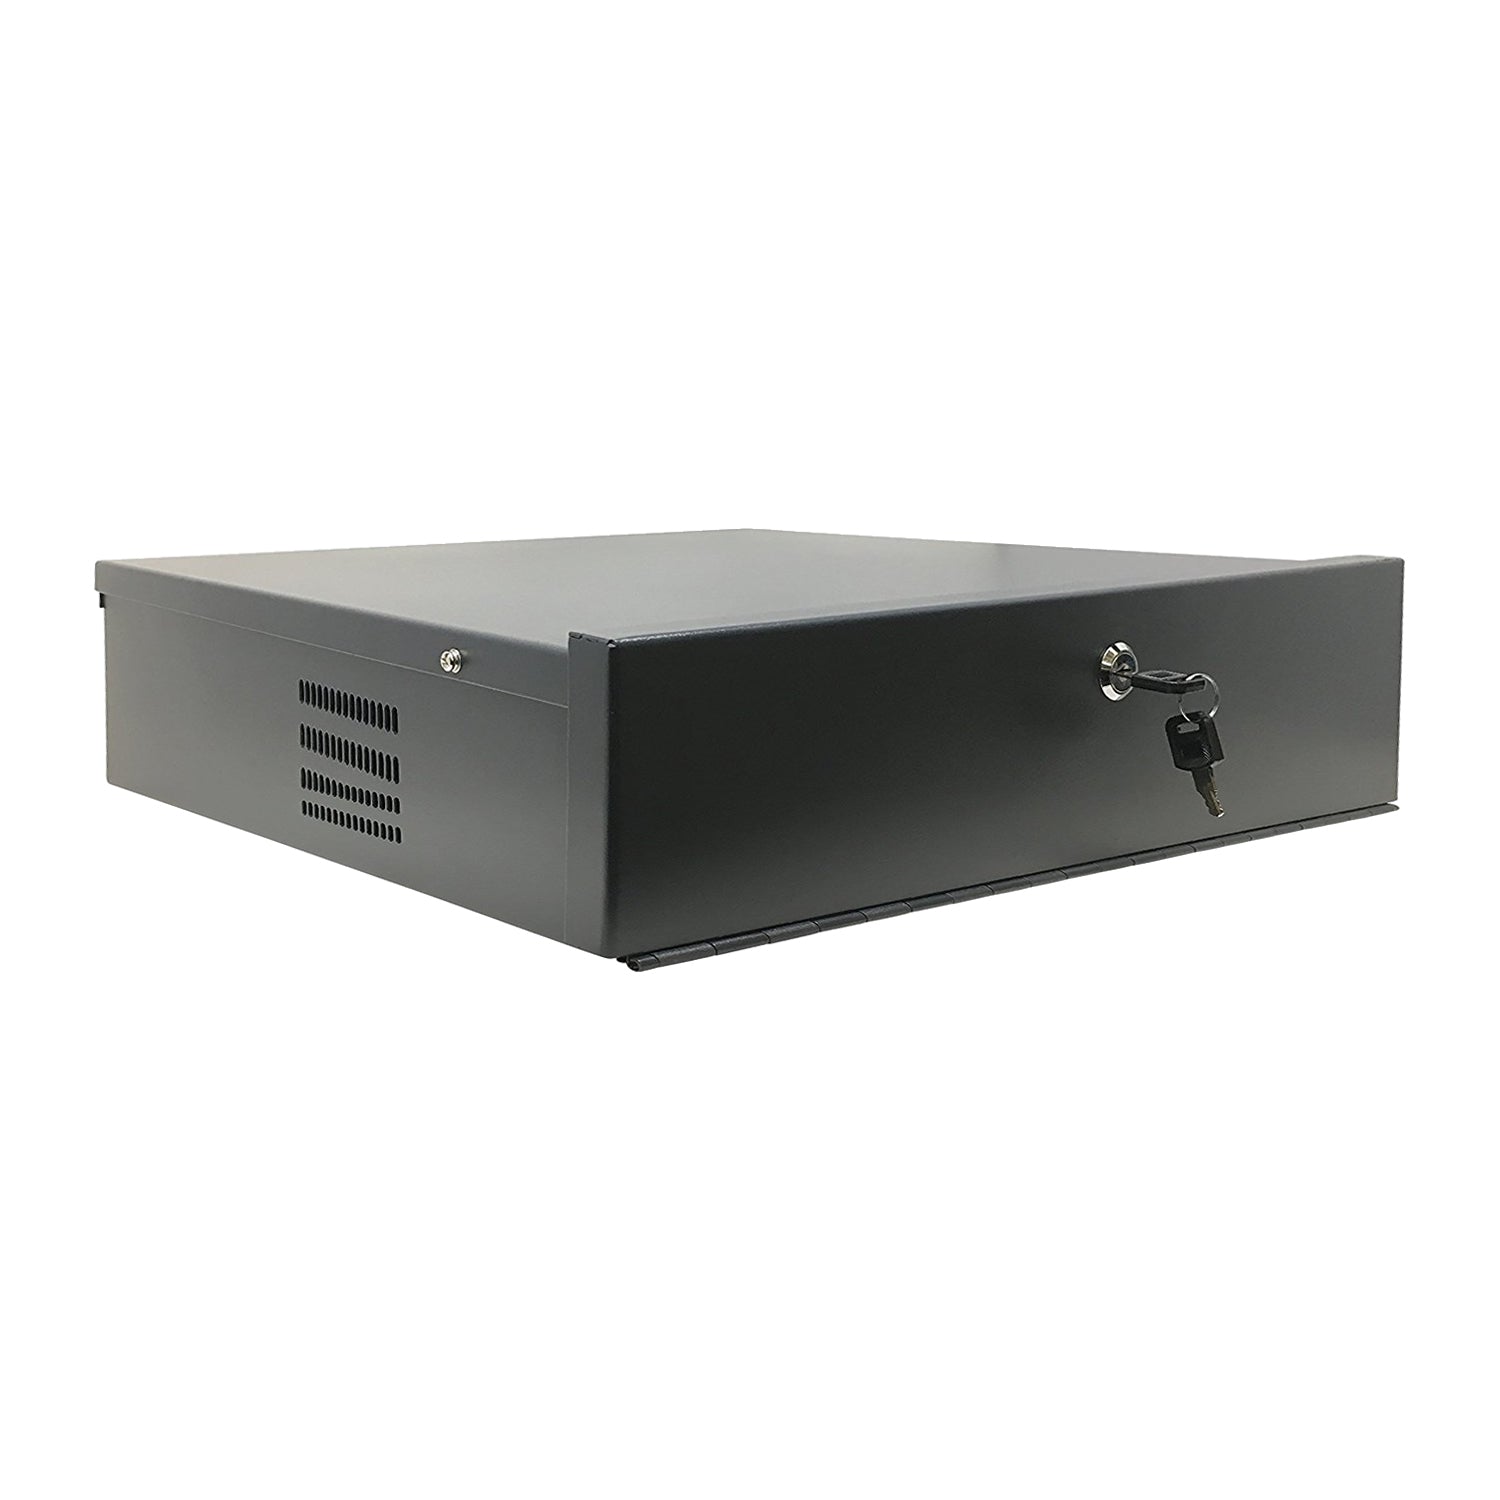 07-6602-12 Heavy Duty DVR / NVR Lock Box